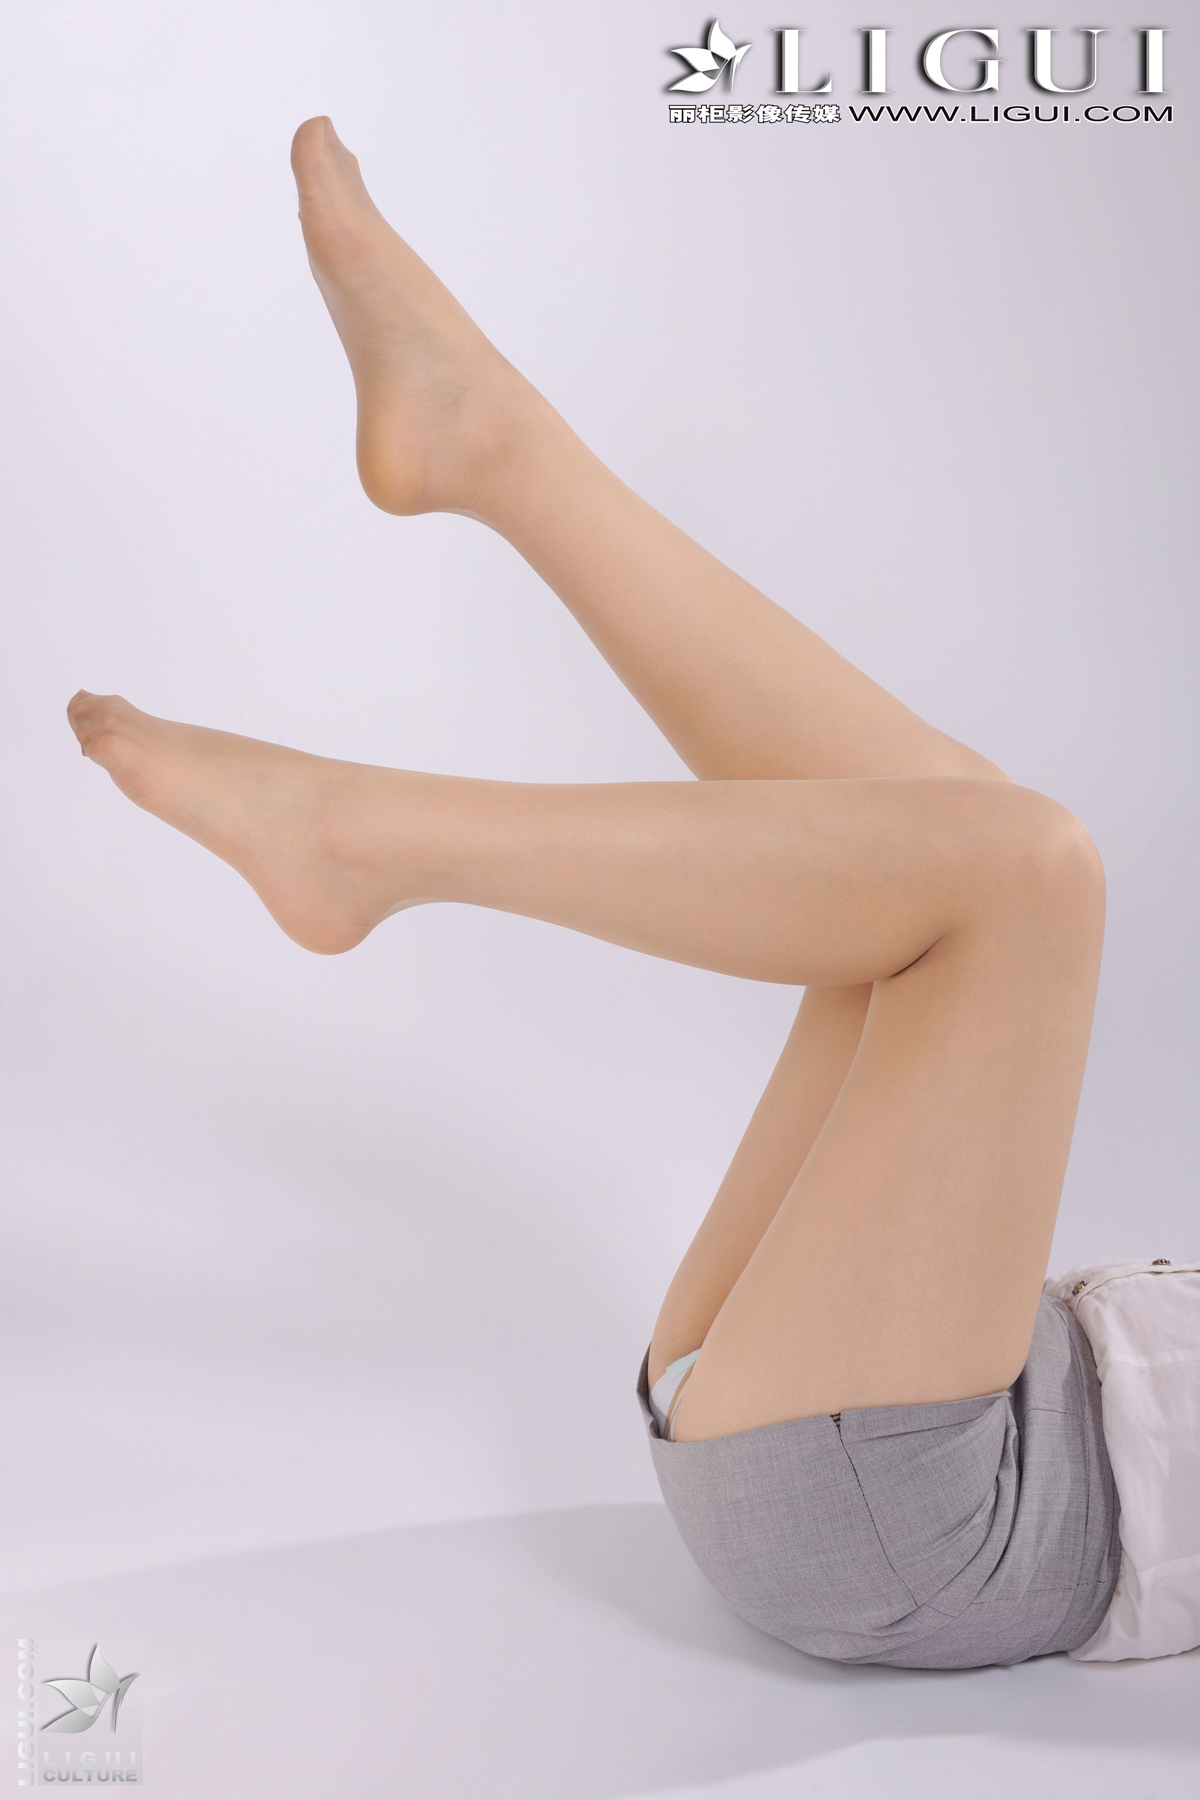 Model quiet female teacher's temptation of silk stockings